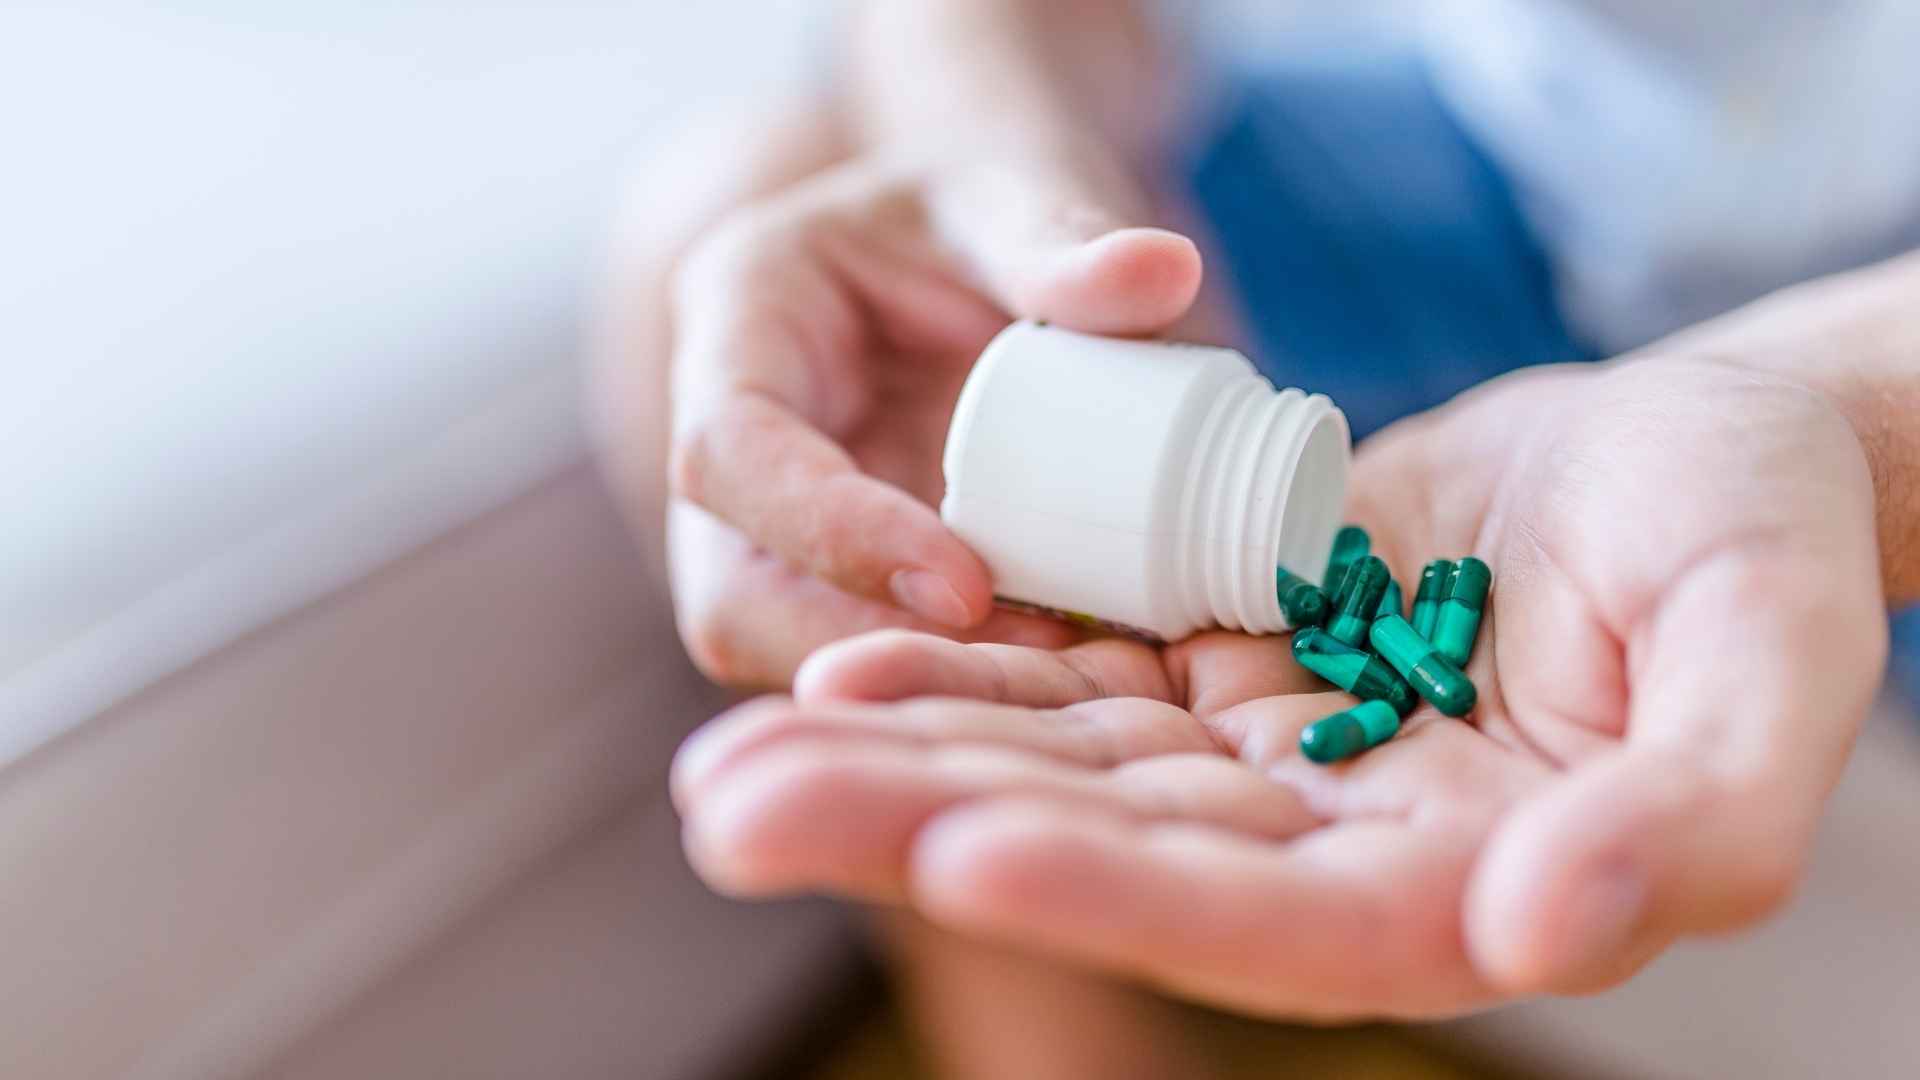 Medication Overdose Awareness